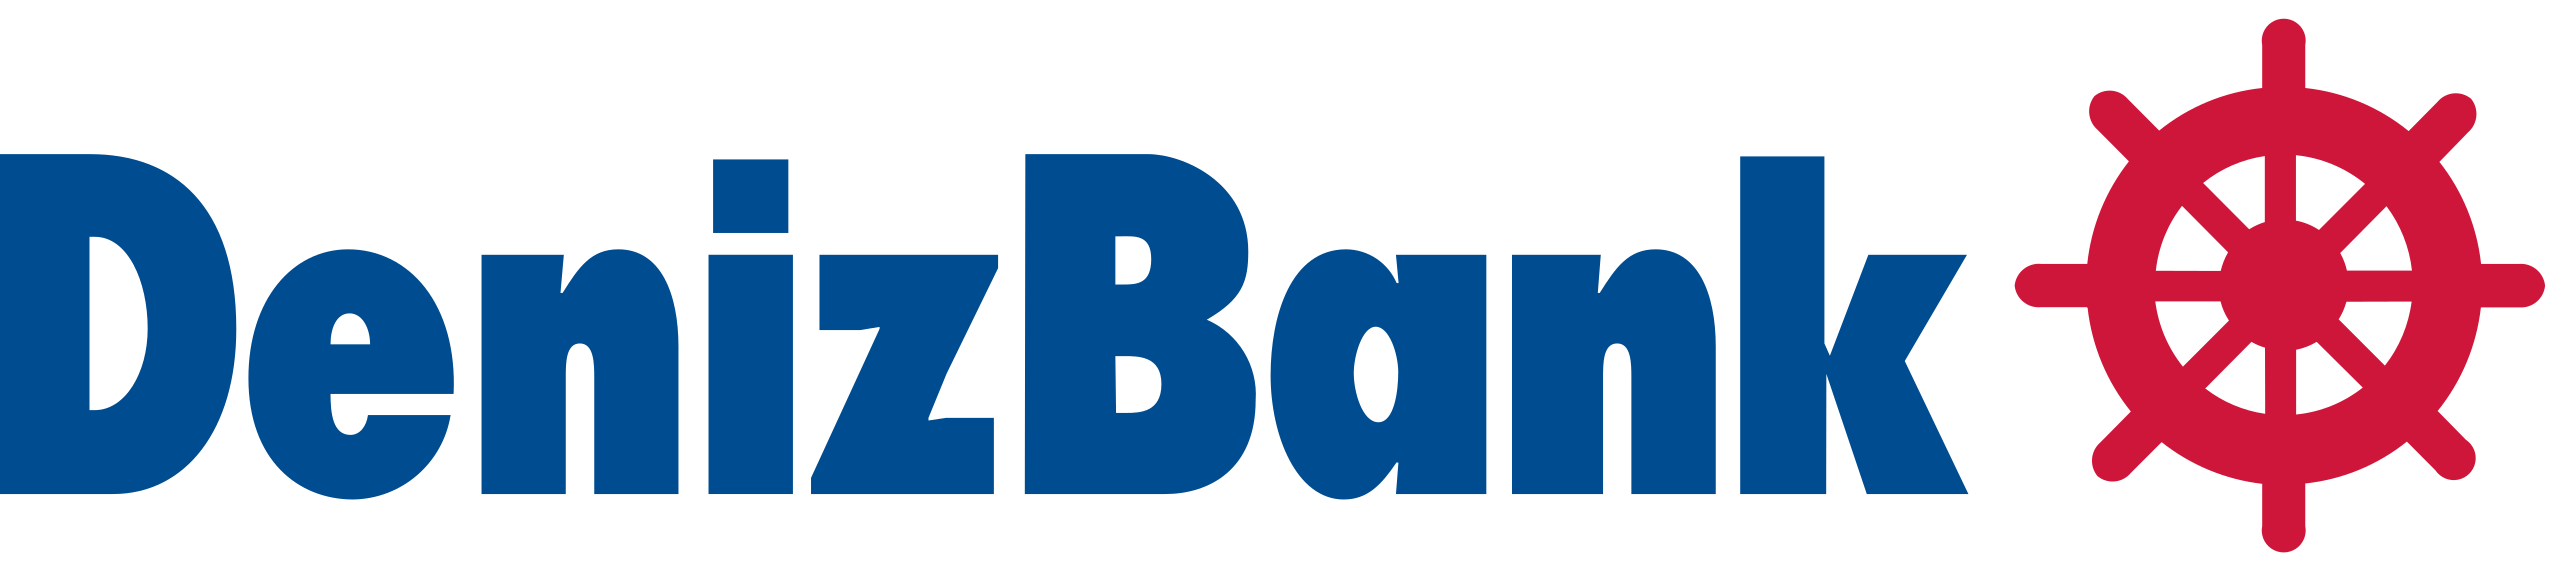 DenizBank.png (73 KB)